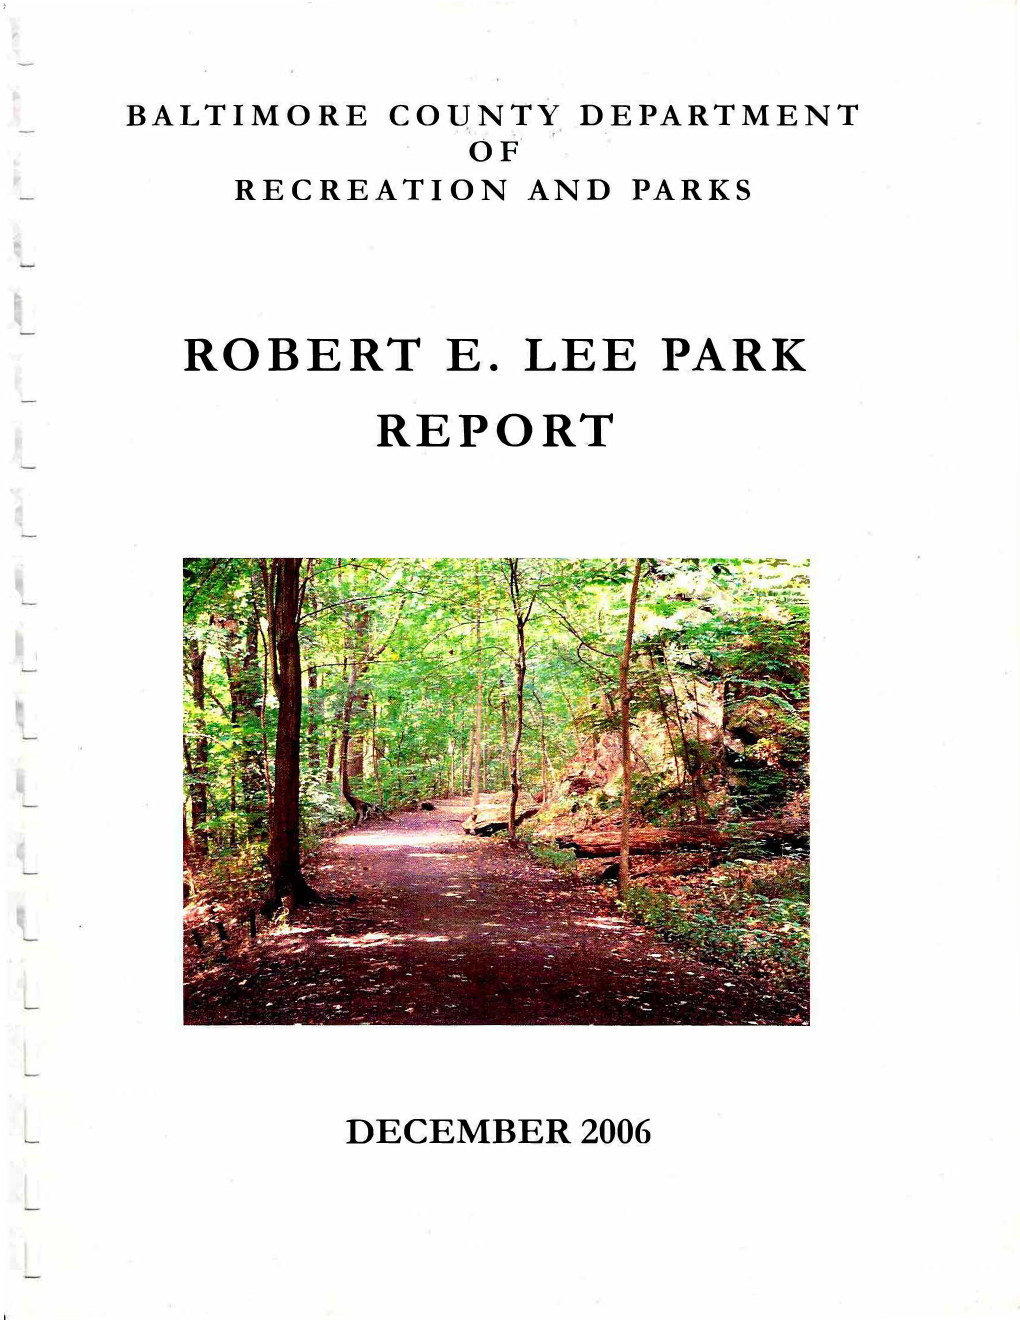 Robert E. Lee Park Report